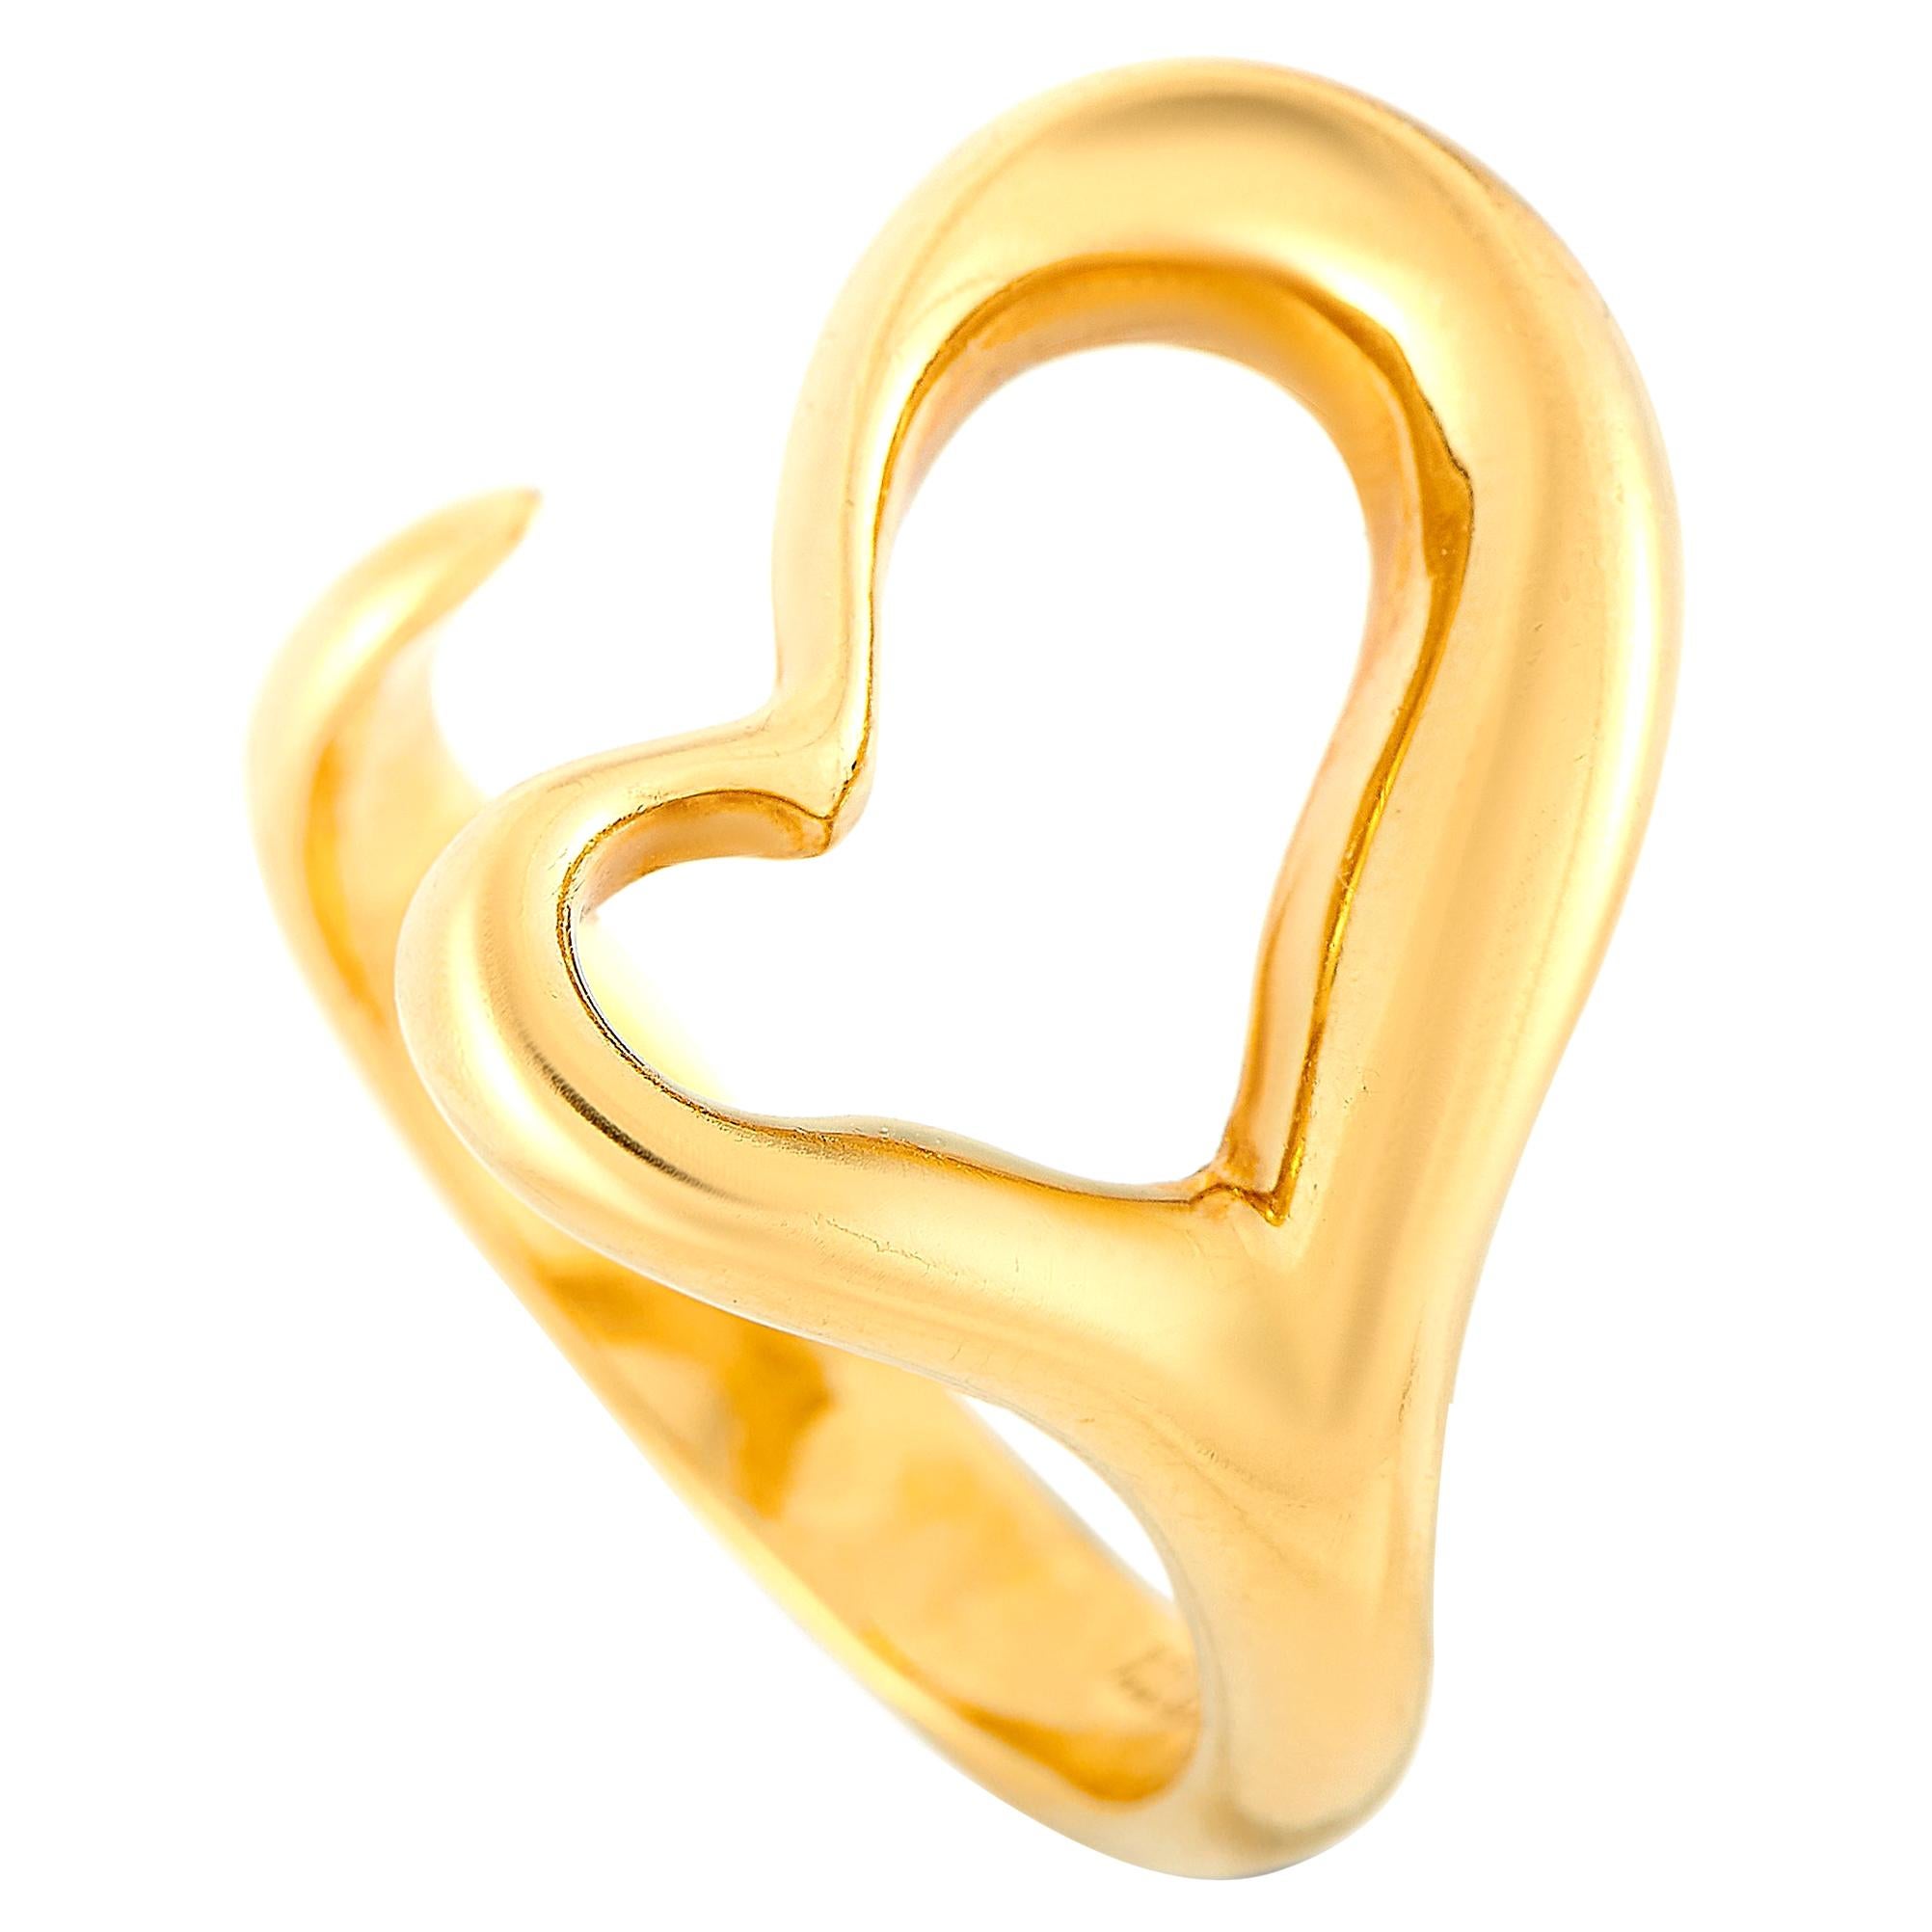 Tiffany & Co. Elsa Peretti 18 Karat Yellow Gold Heart Ring